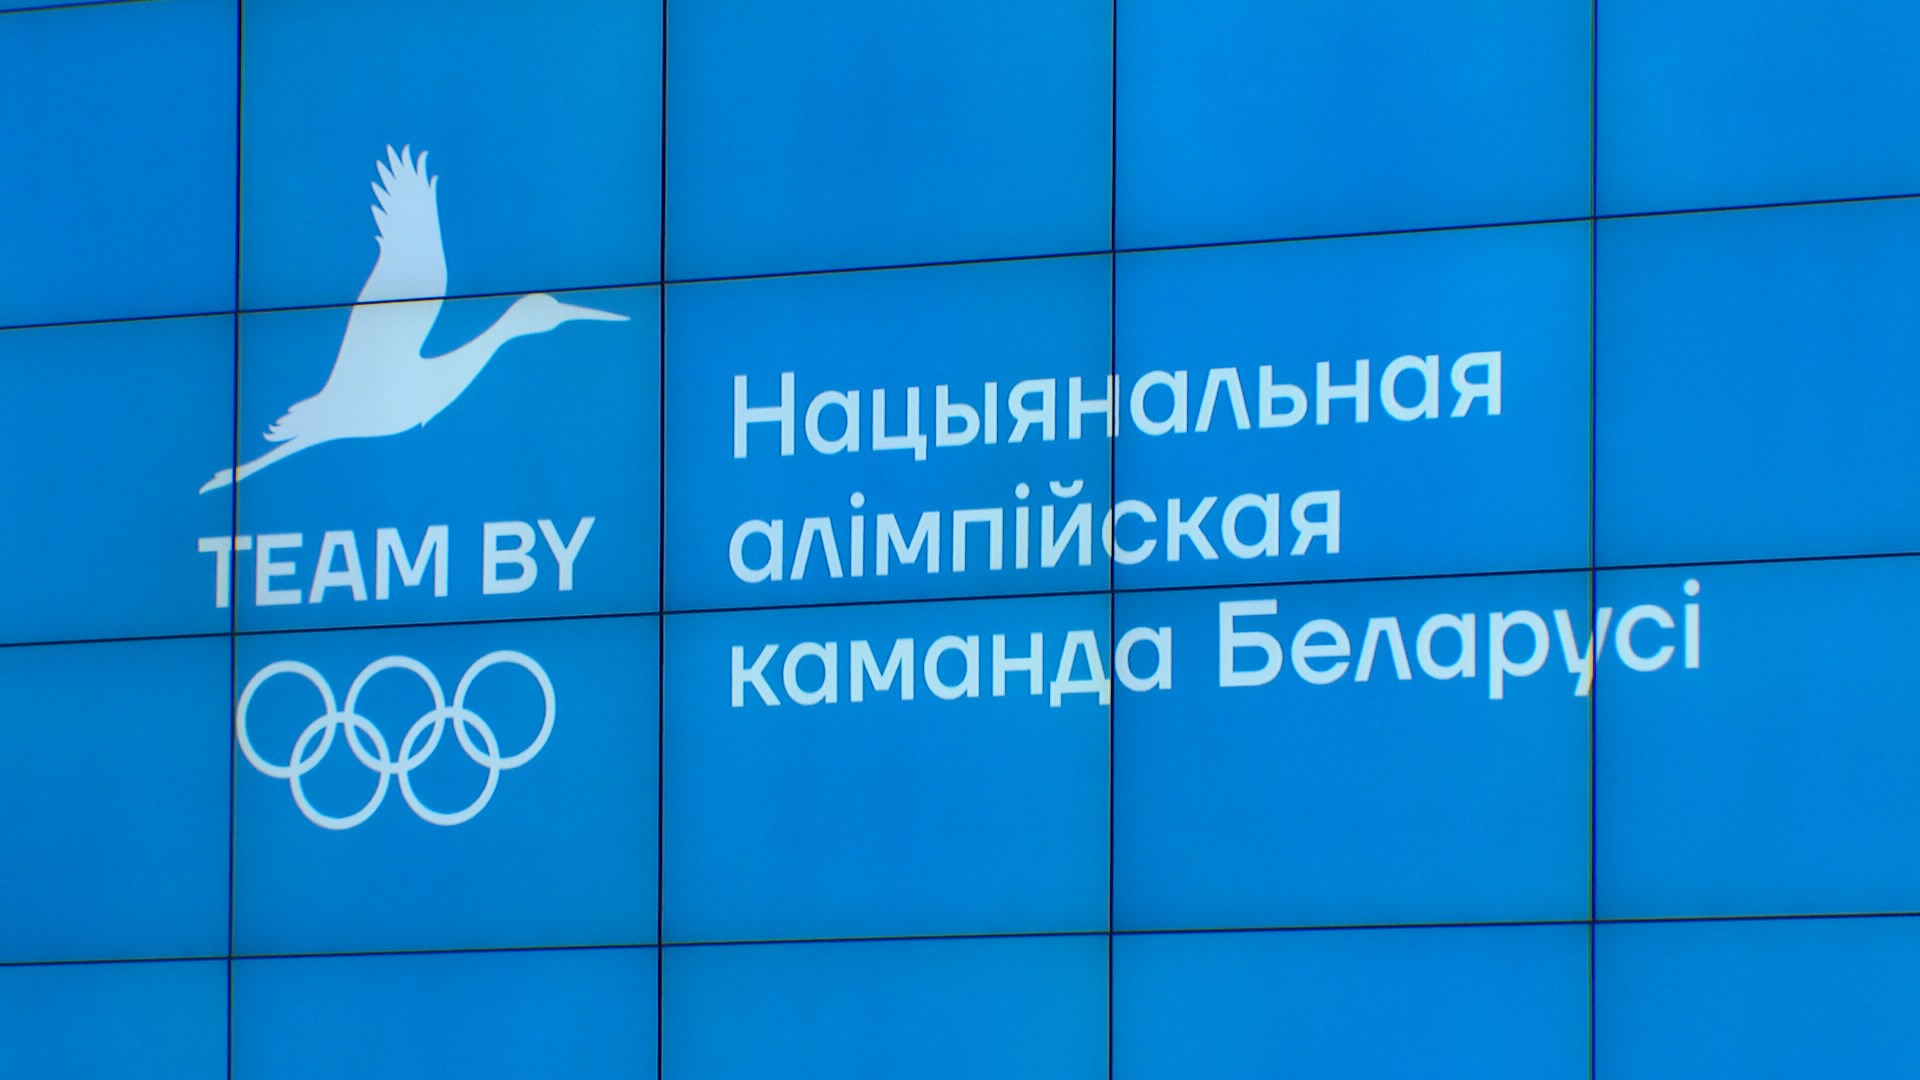 Belarus earned 71 licenses for Tokyo Olympics